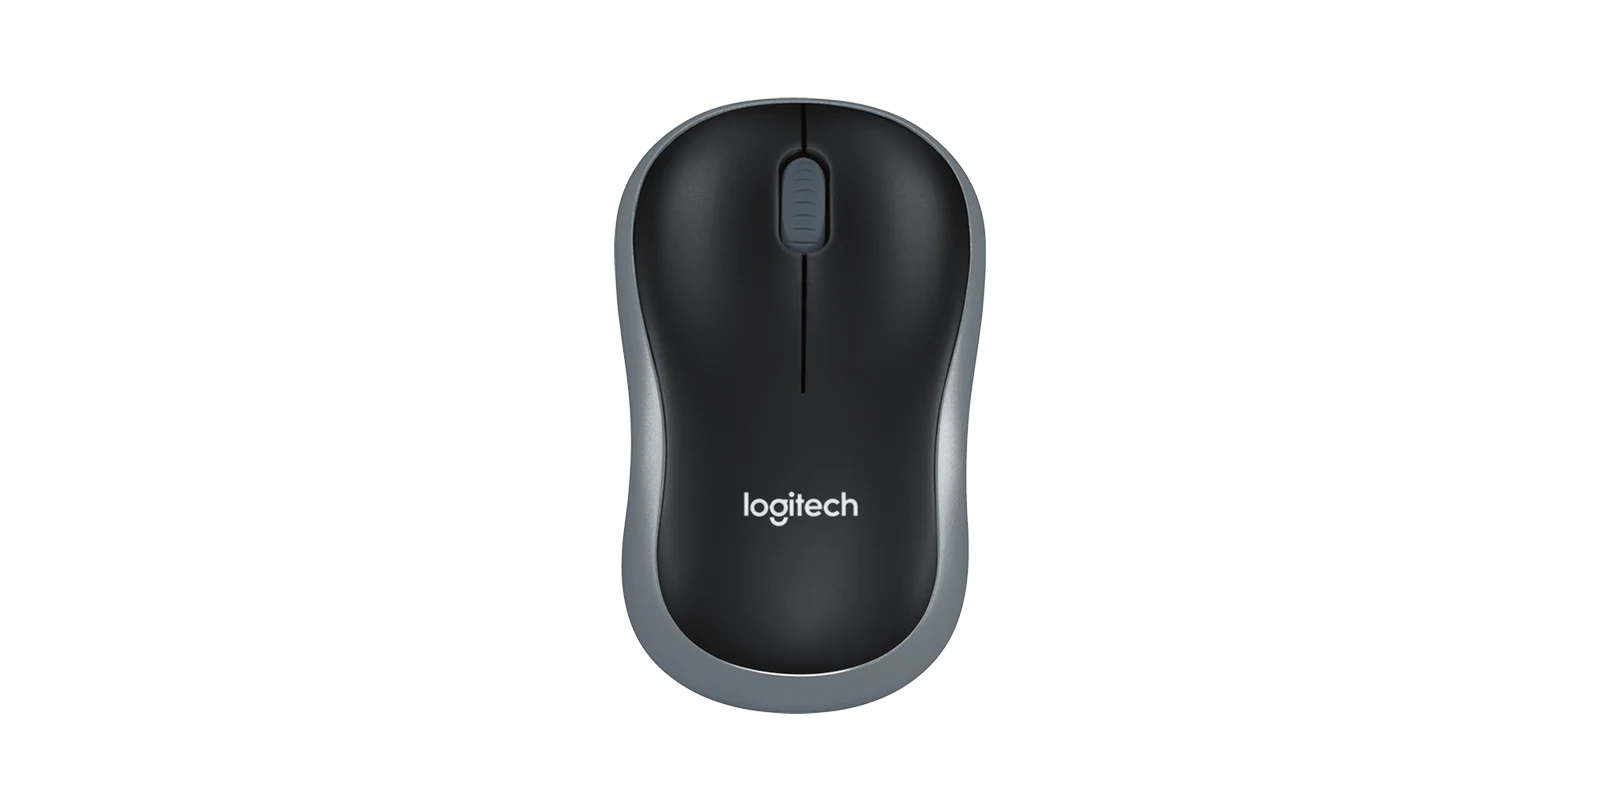 Logitech MK270r Wireless Keyboard and Mouse Combo